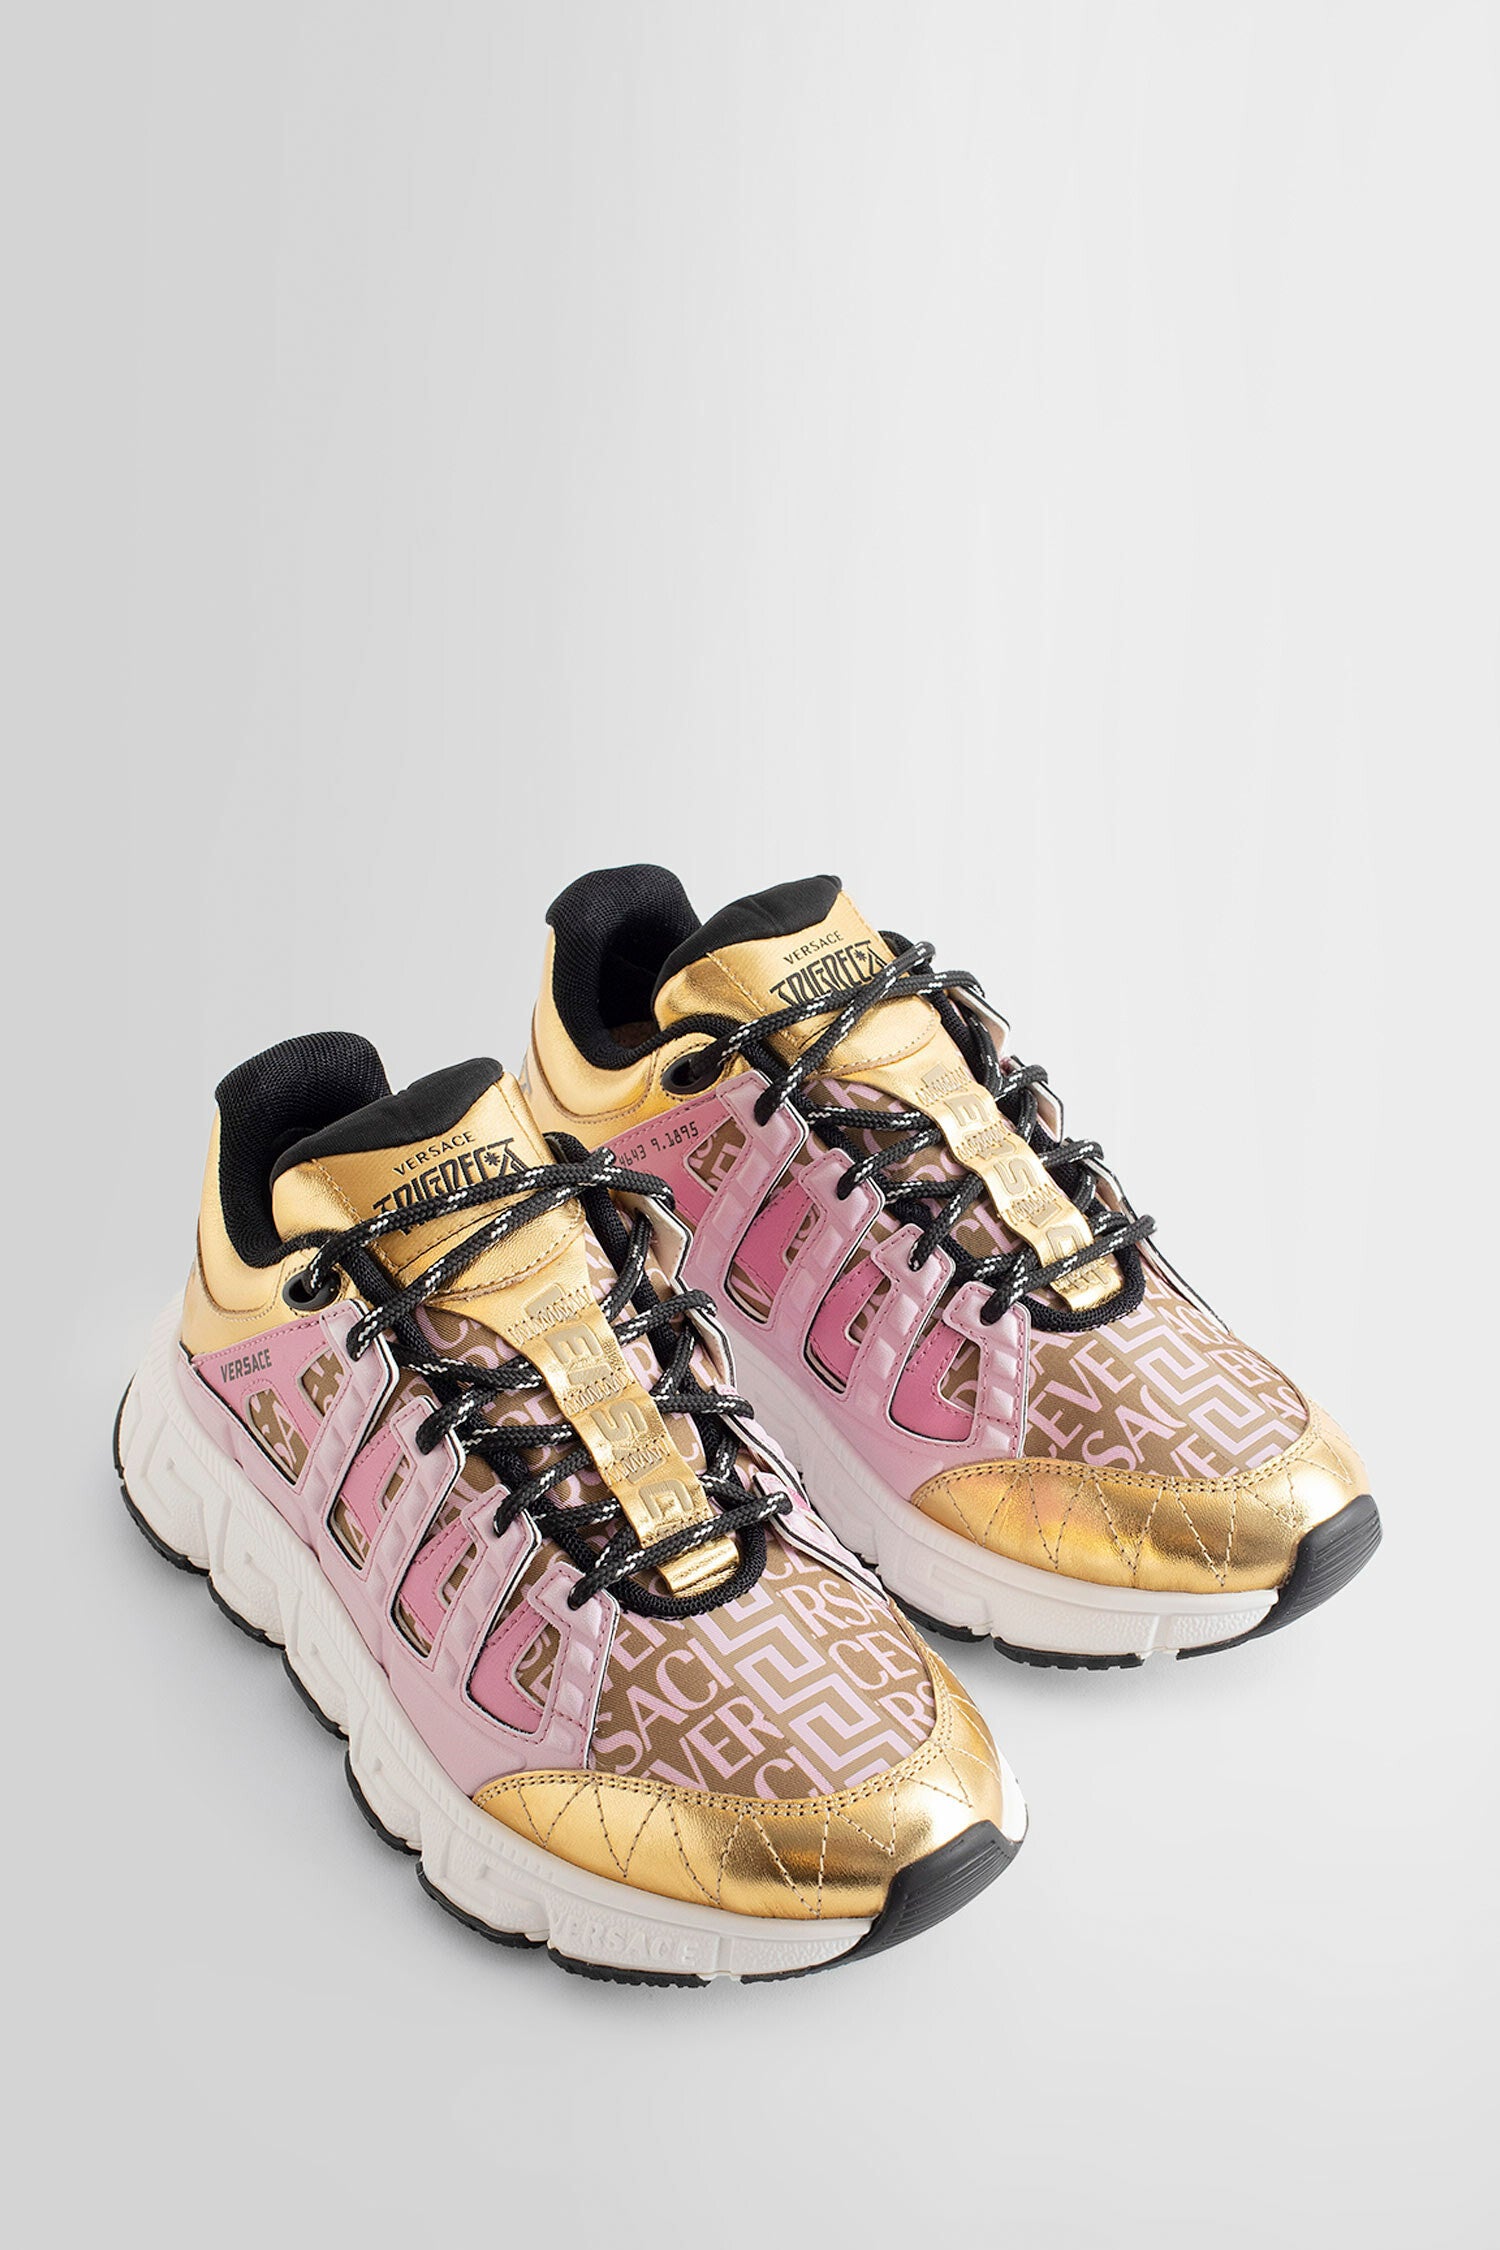 Versace chain reaction multicolor women's sneakers size 38